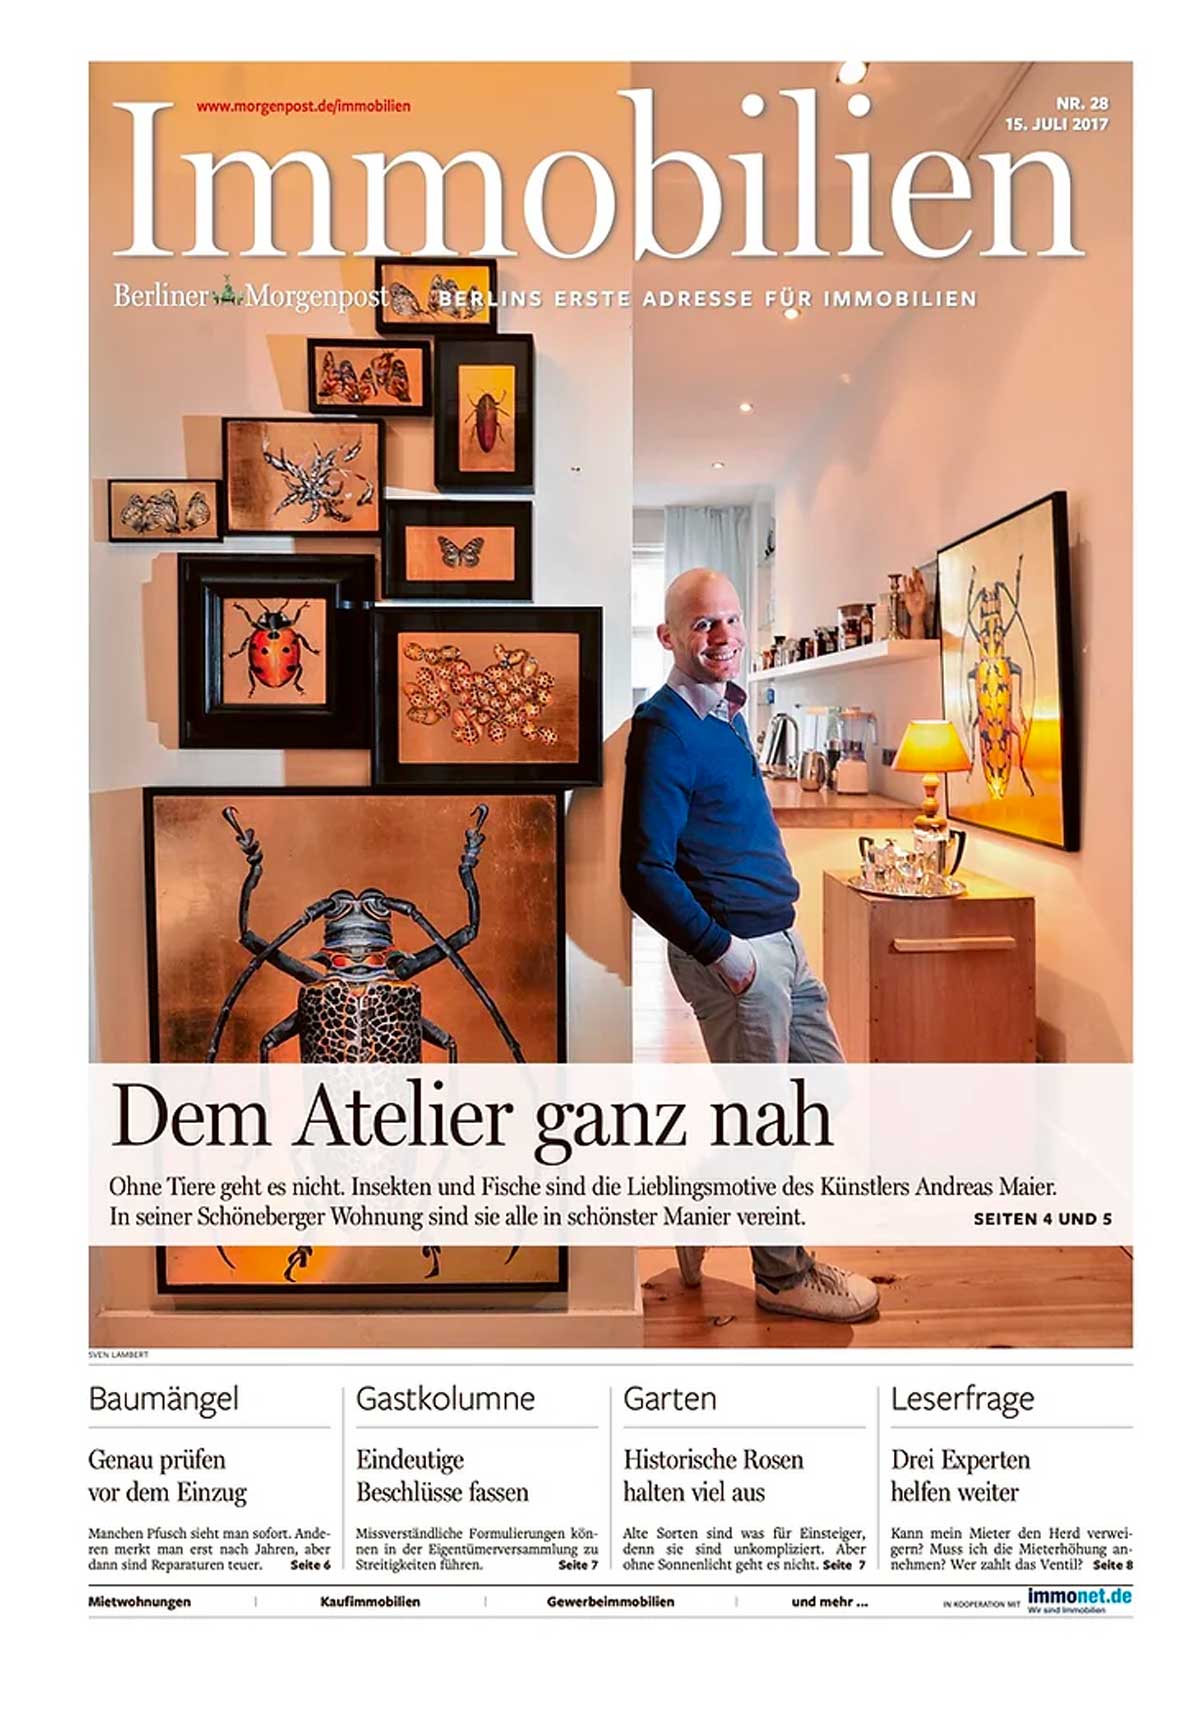 Berliner Morgenpost, Immobilien, Ausgabe, Juli 2017